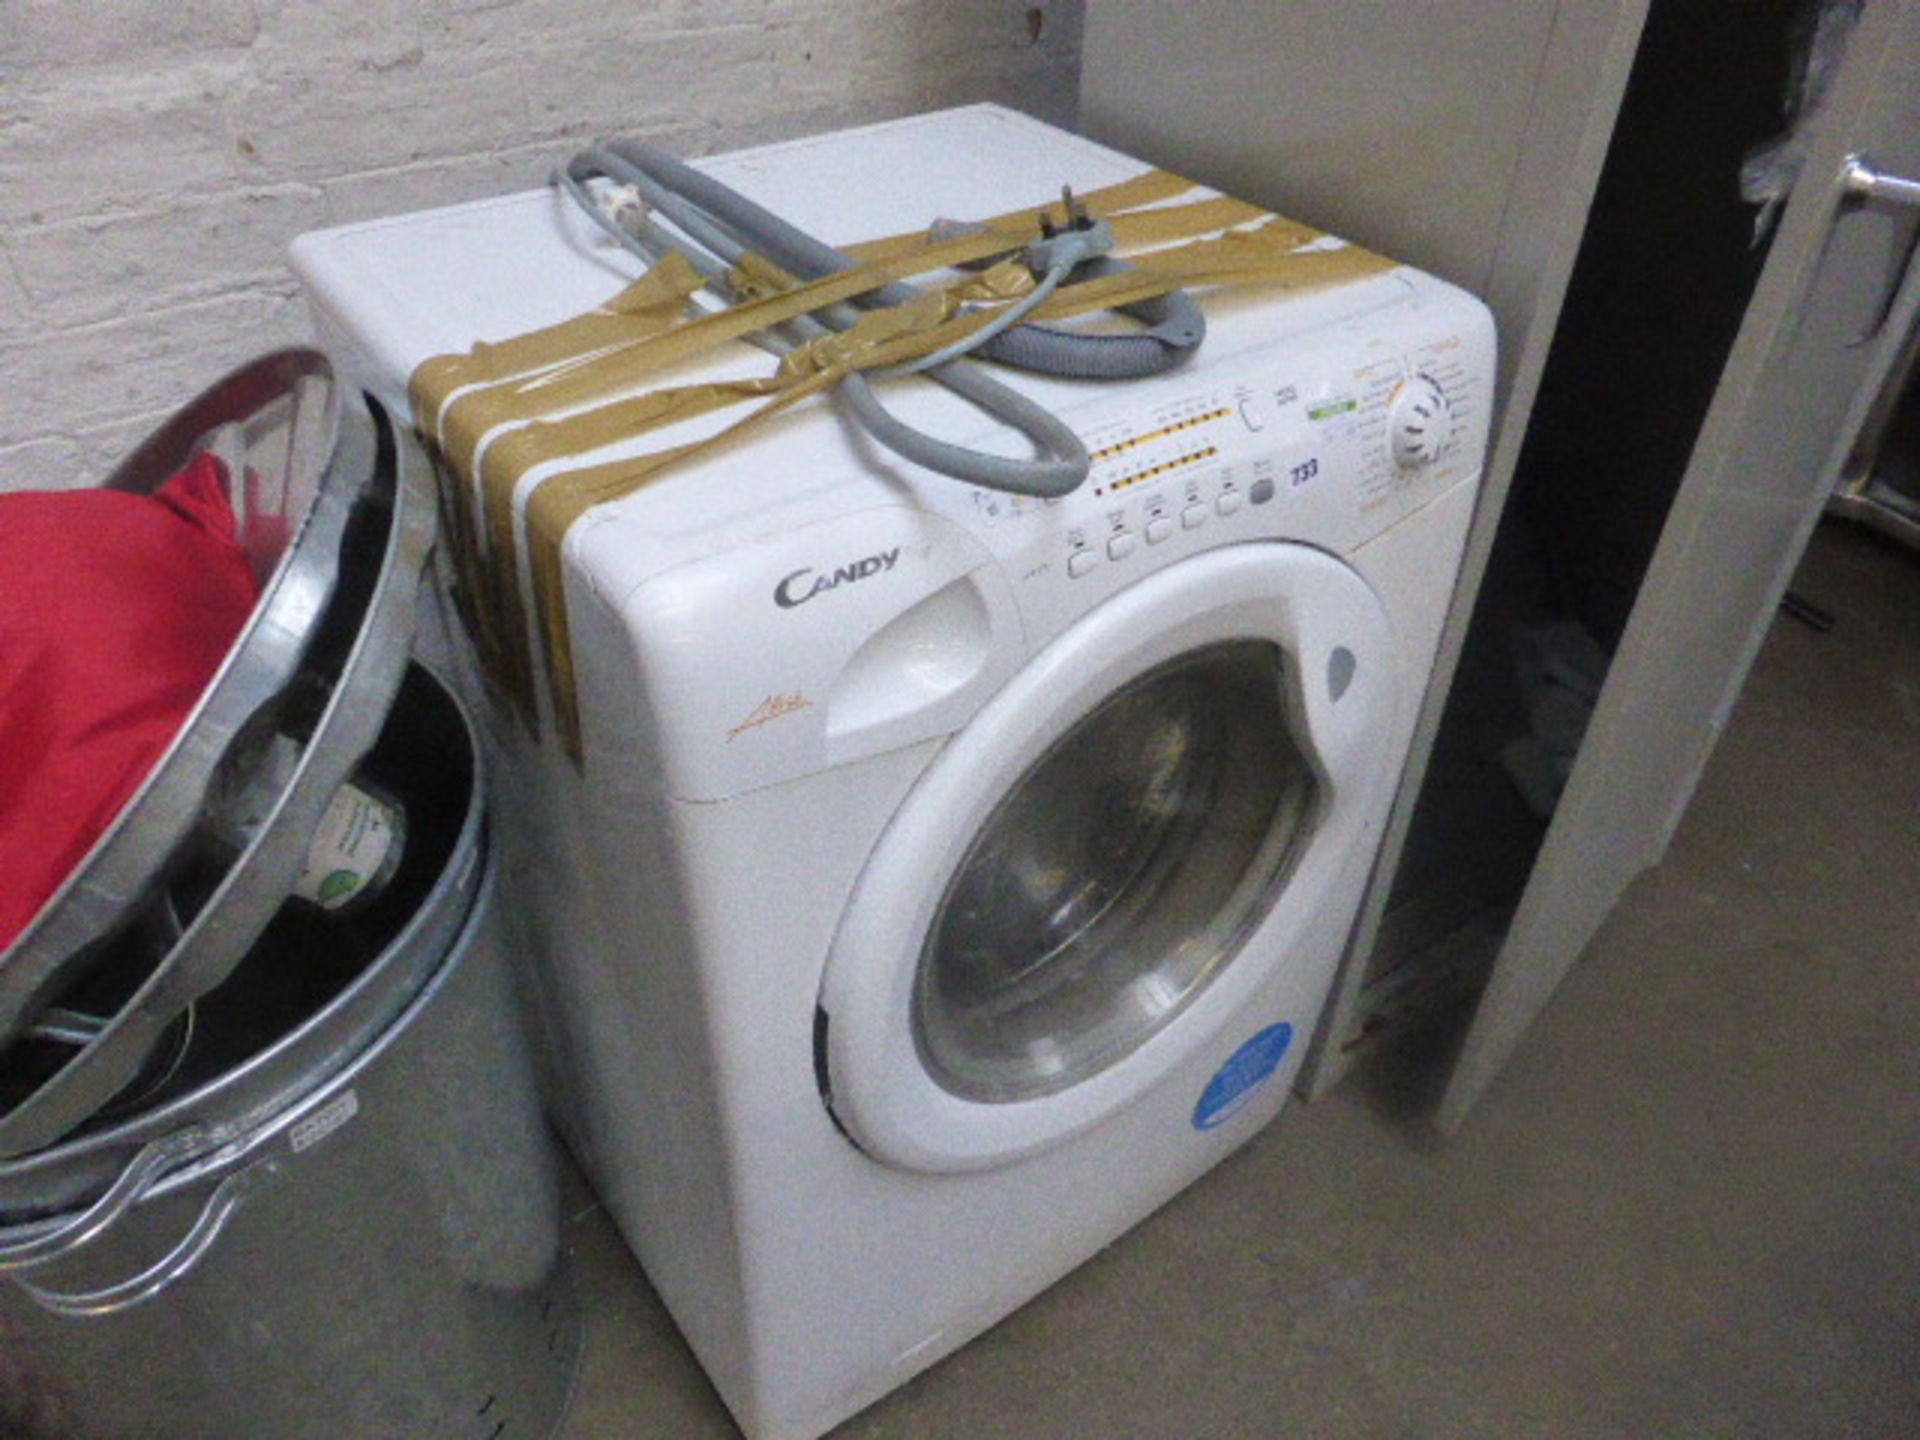 (160) 60cm Candy washing machine